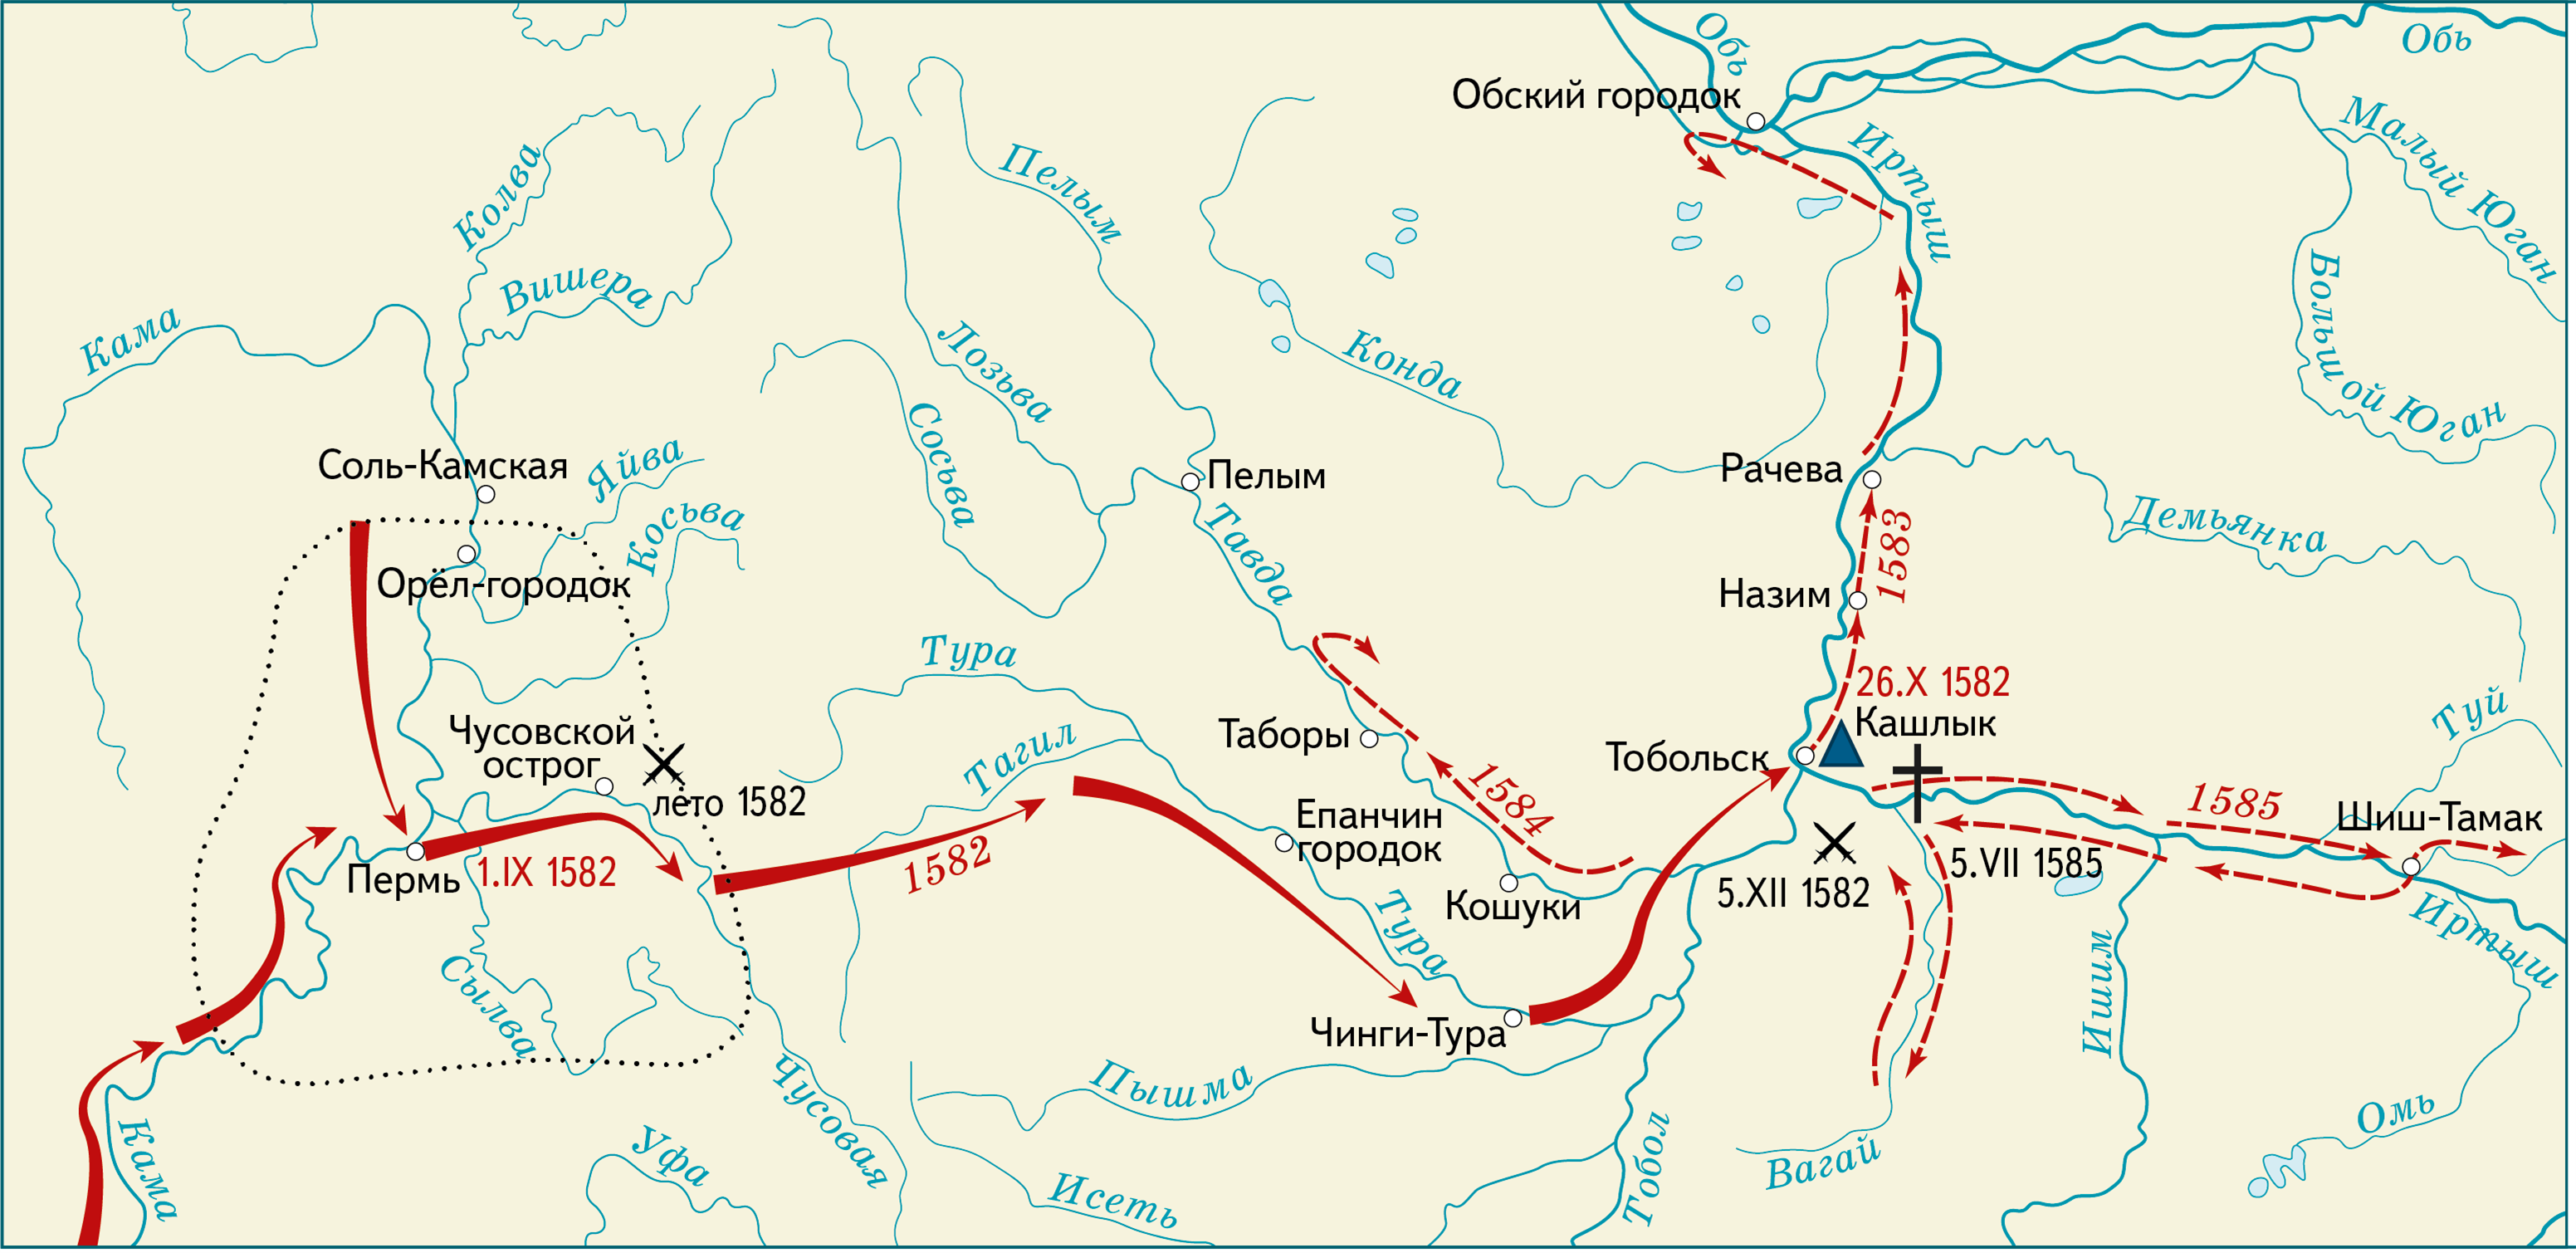 Город кашлык и река иртыш на карте. Поход Ермака в Сибирь 1581-1585. 1581 Поход Ермака в Сибирь. Карта поход Ермака в Сибирь 1581.